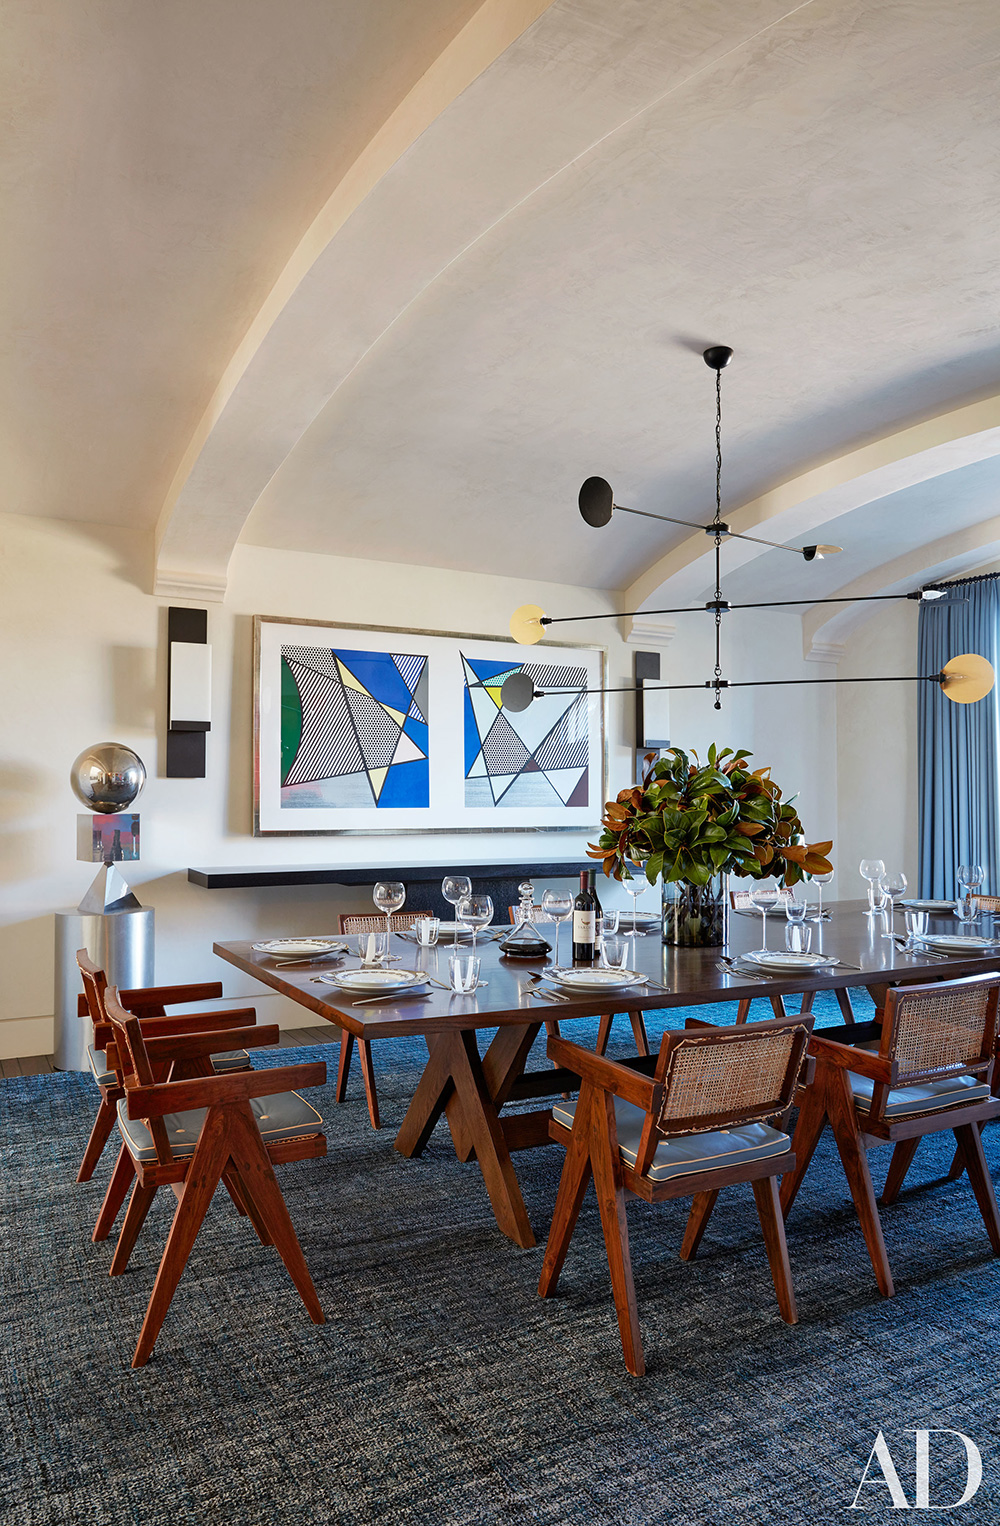 Kourtney's dining room features a large framed artwork by Roy Lichtenstein.